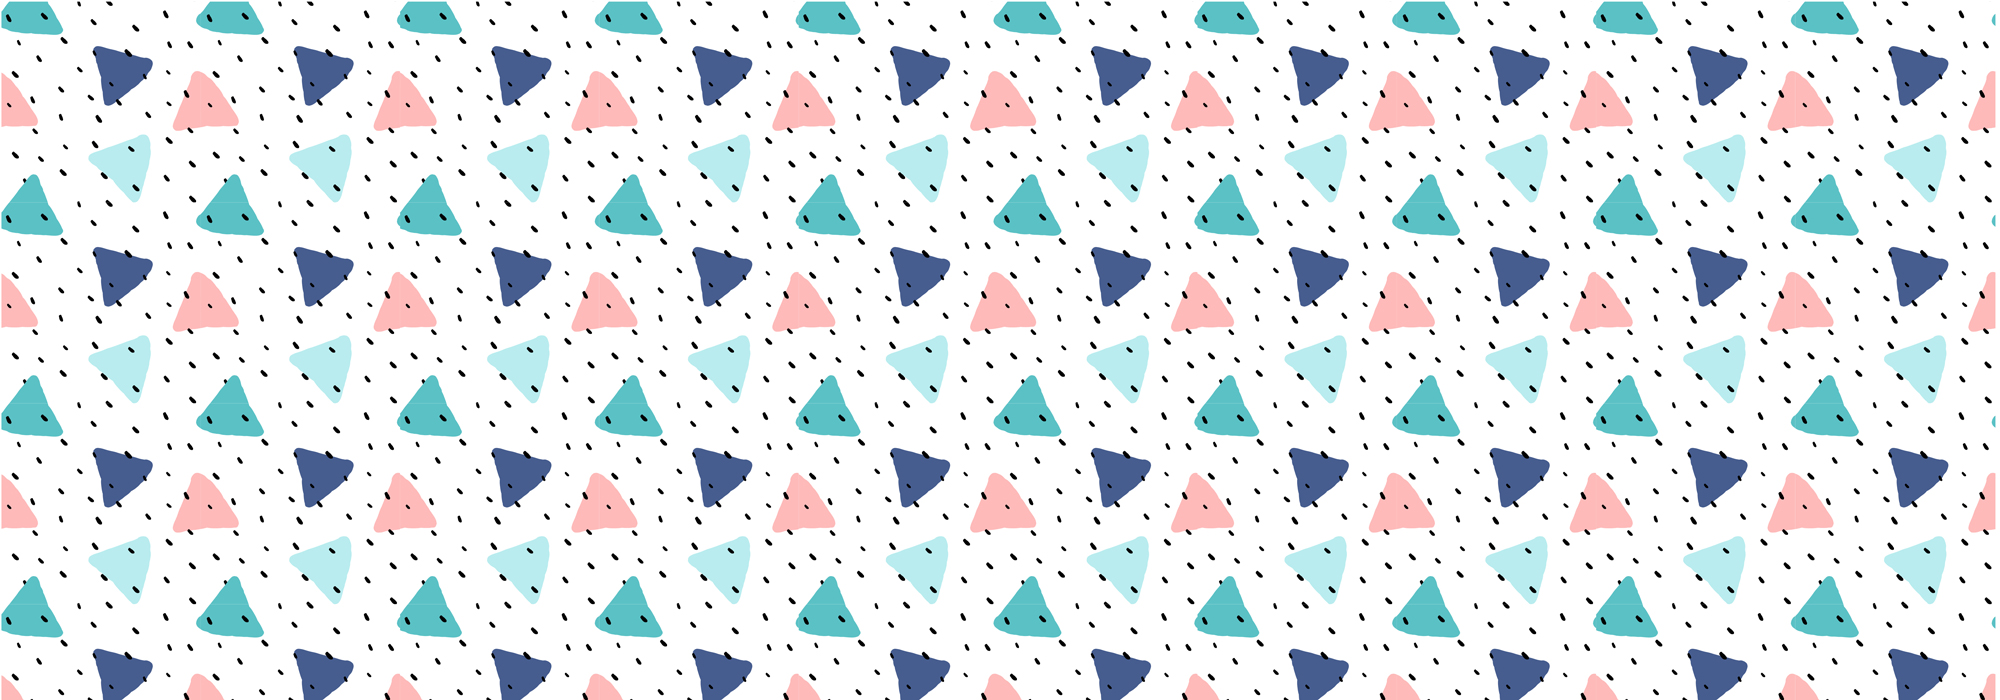 Pattern-2@4x-100_2.jpg